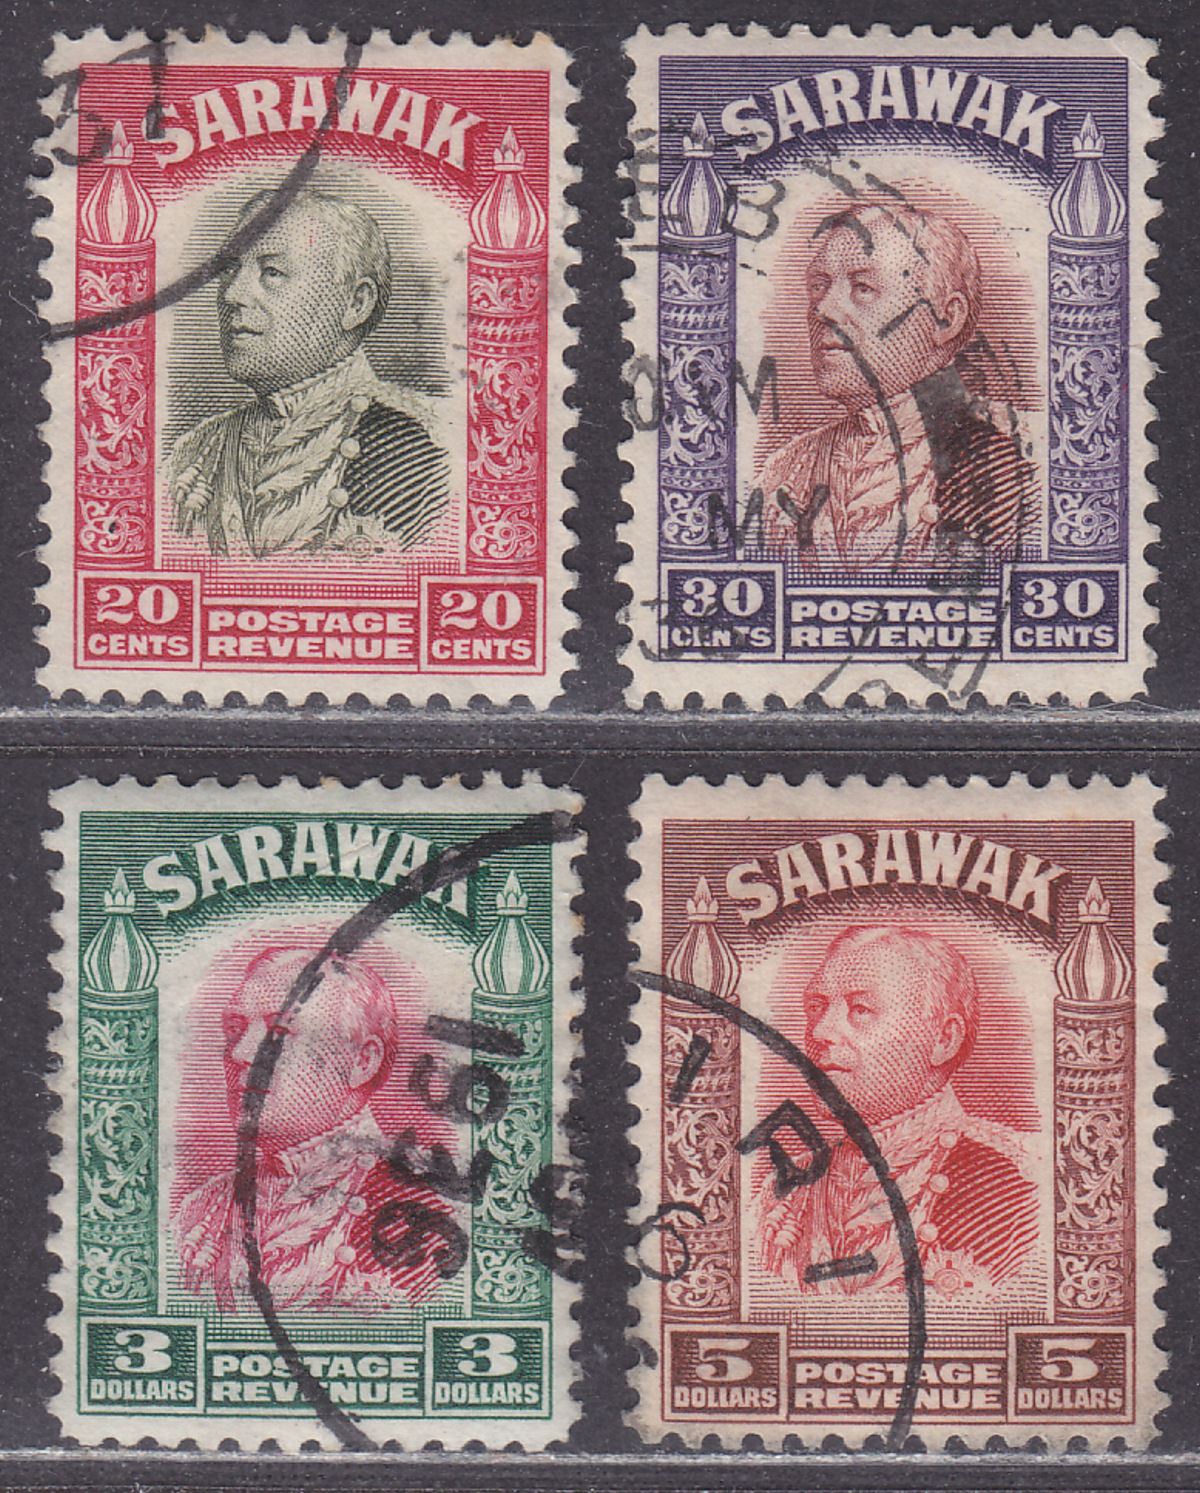 Sarawak 1934 KGV Charles Vyner Brooke 20c, 30c, $3, $5 Used cat £140